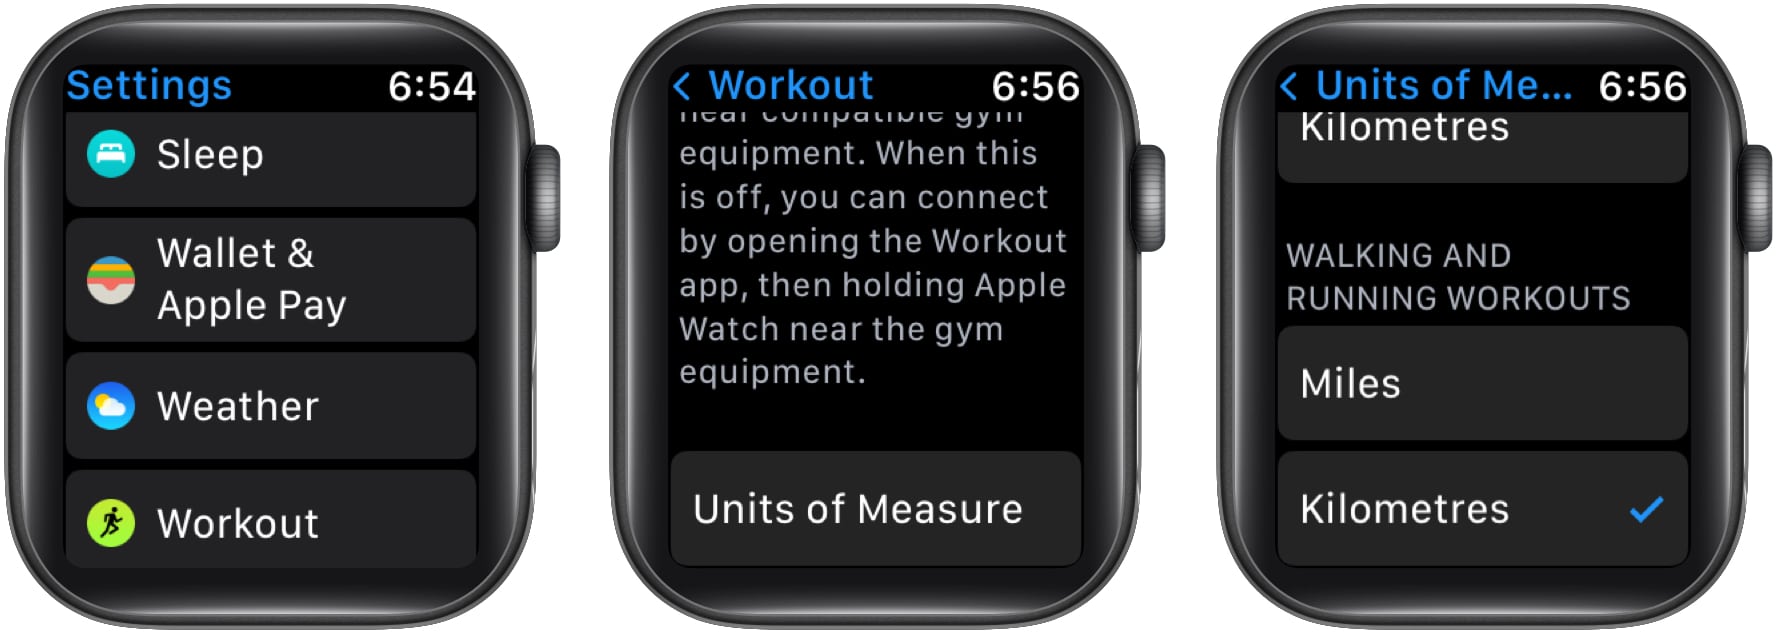 Change miles to kilometers on Apple Watch